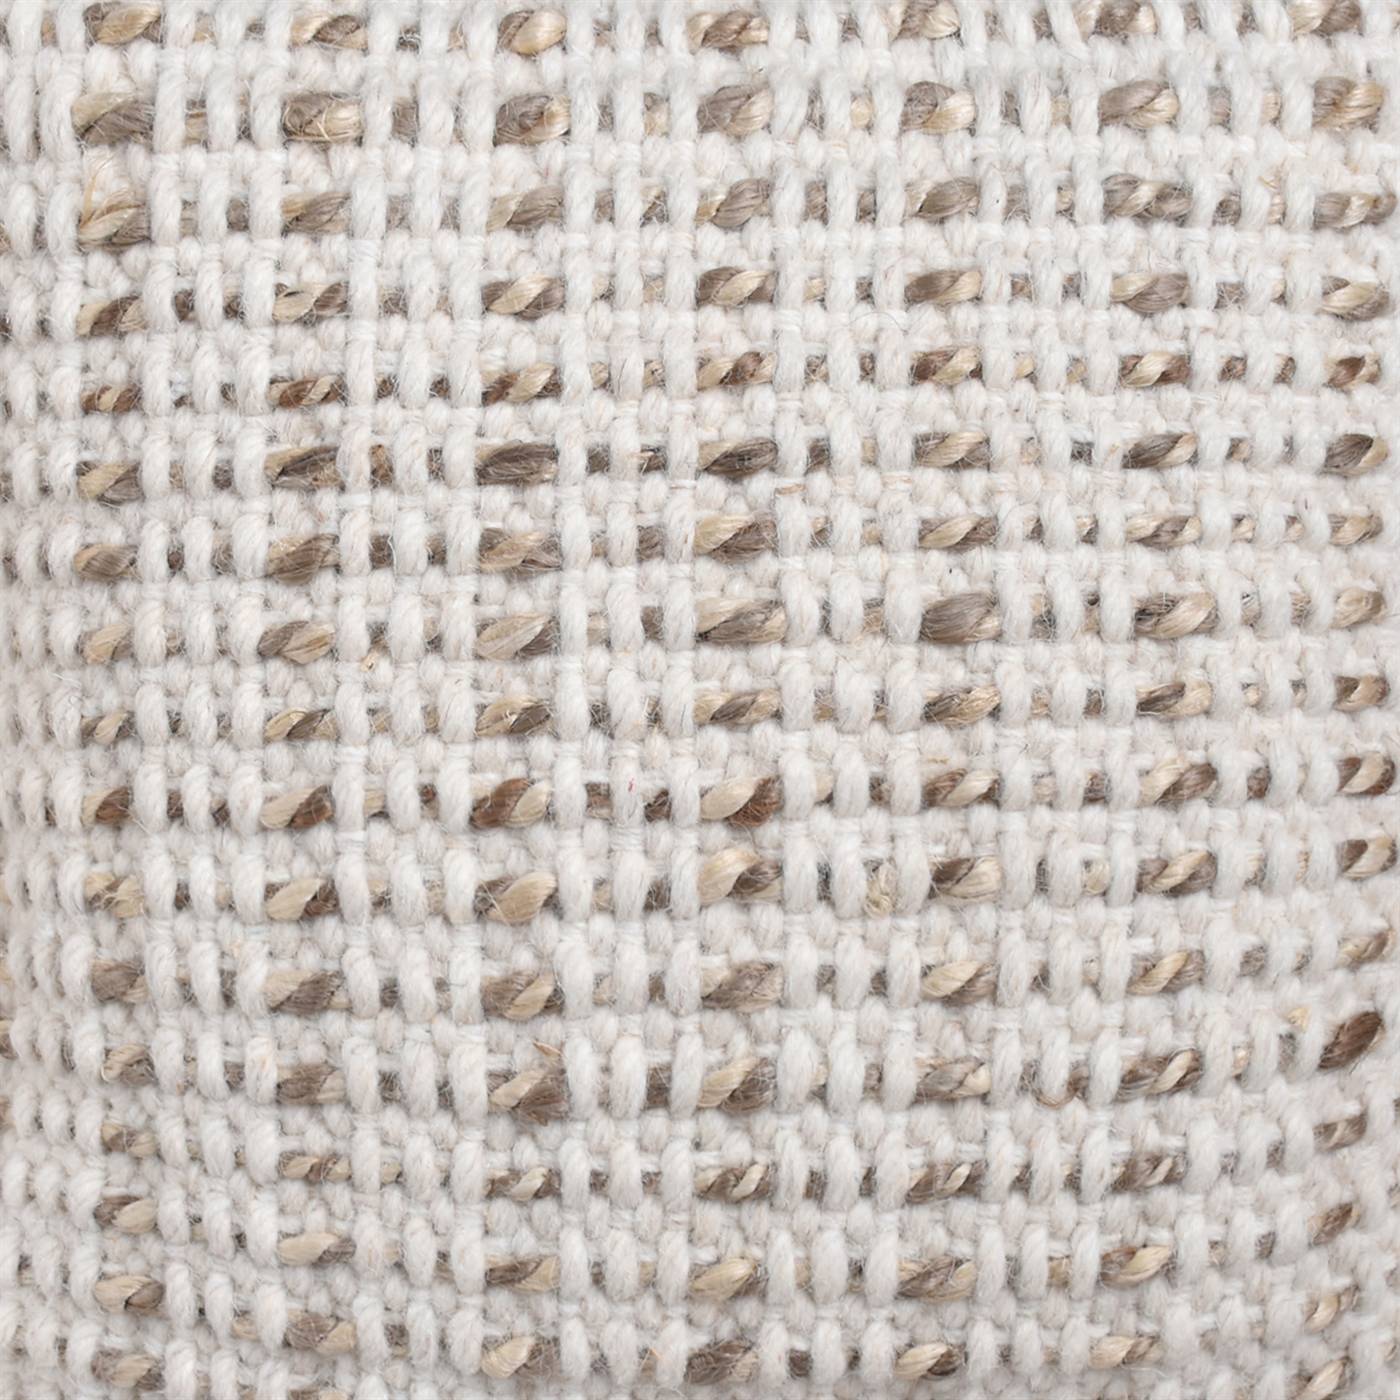 Brenda Cushion, 45x45 cm, Natural, Natural White, Wool, Jute, Hand Woven, Pitloom, Flat Weave 